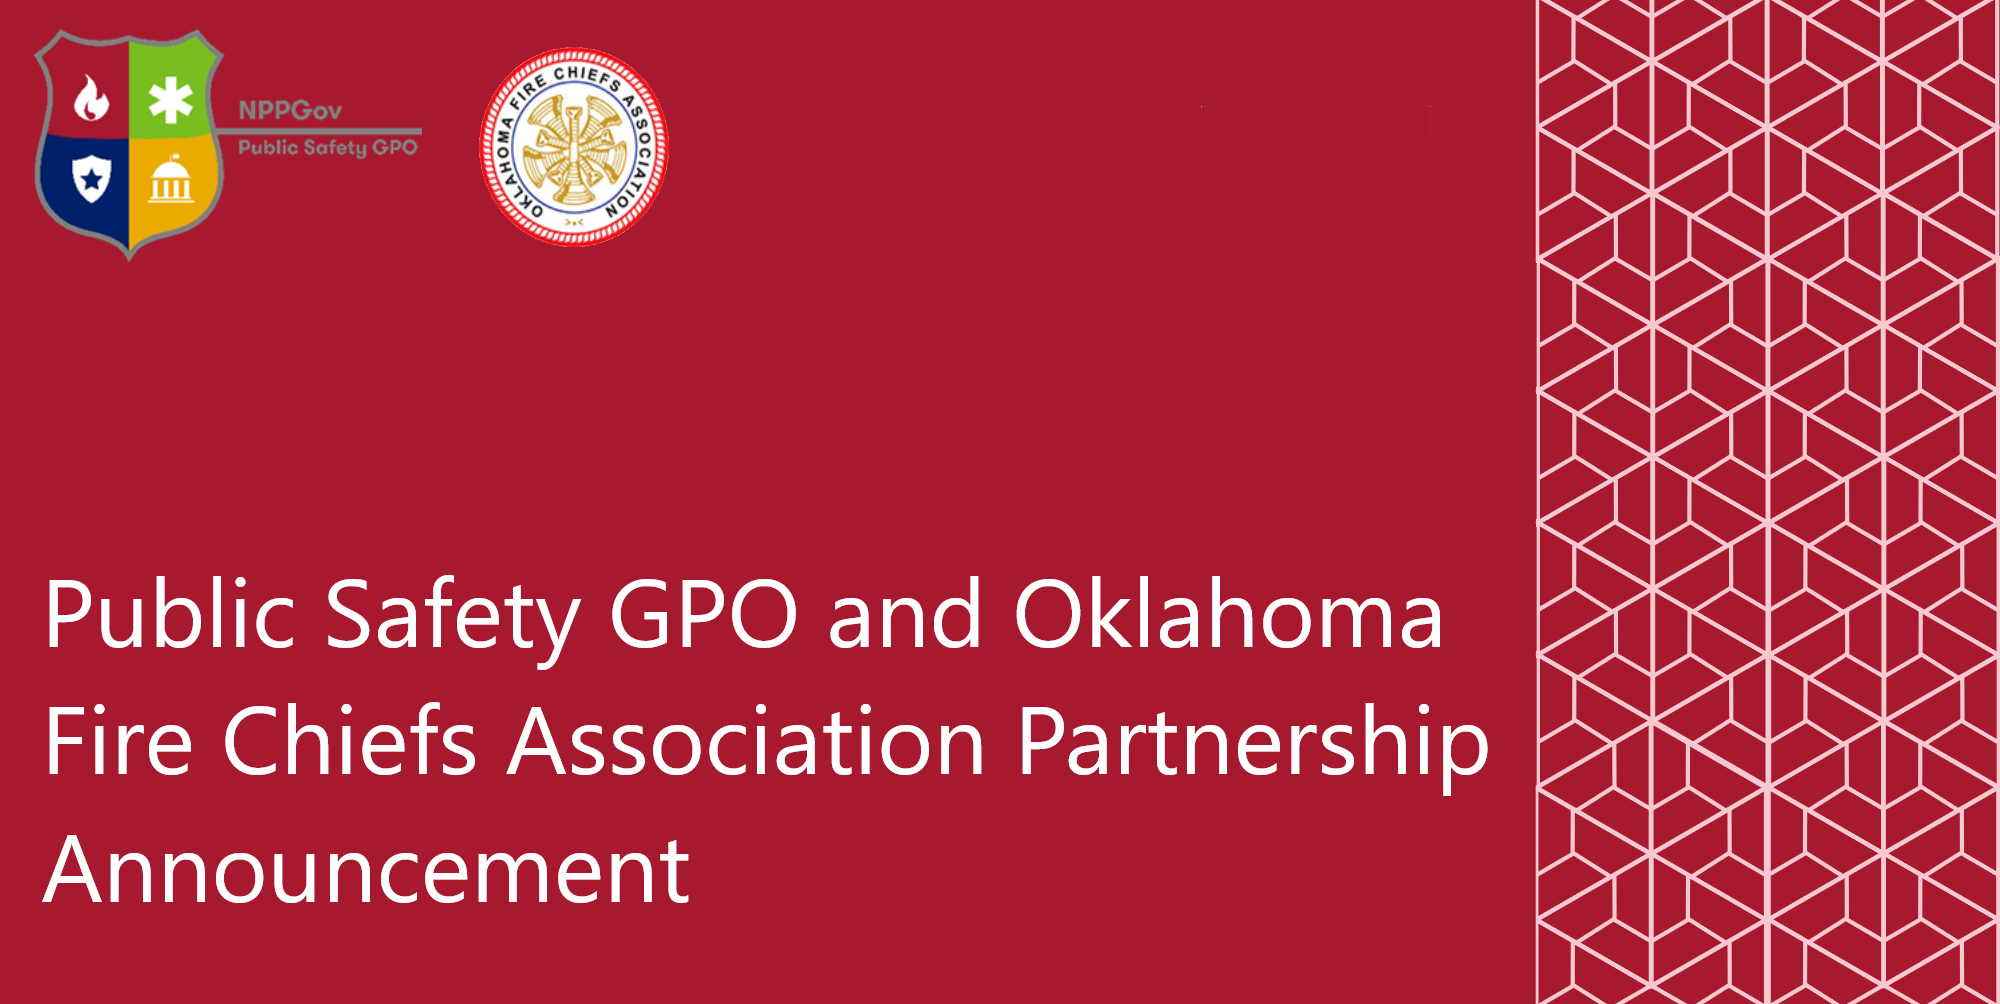 Oklahoma Fire Chiefs Partnership Announcement